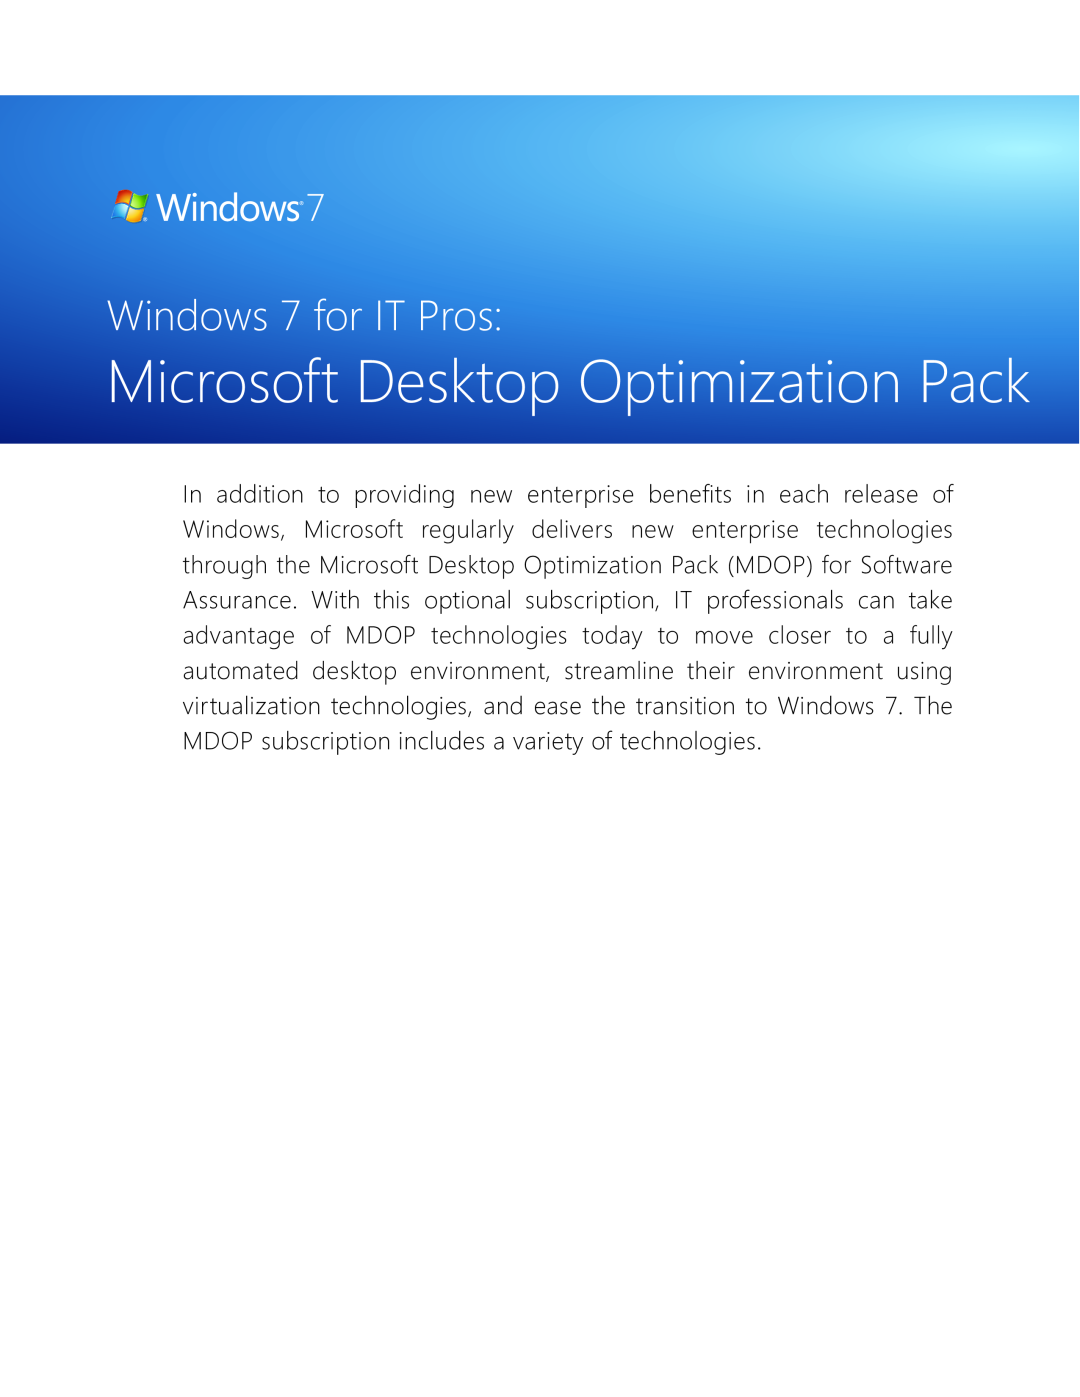 Microsoft FQC04617, GLC00182, GLC01878, GLC00184, GFC00941 manual Microsoft Desktop Optimization Pack, Windows 7 for IT Pros 